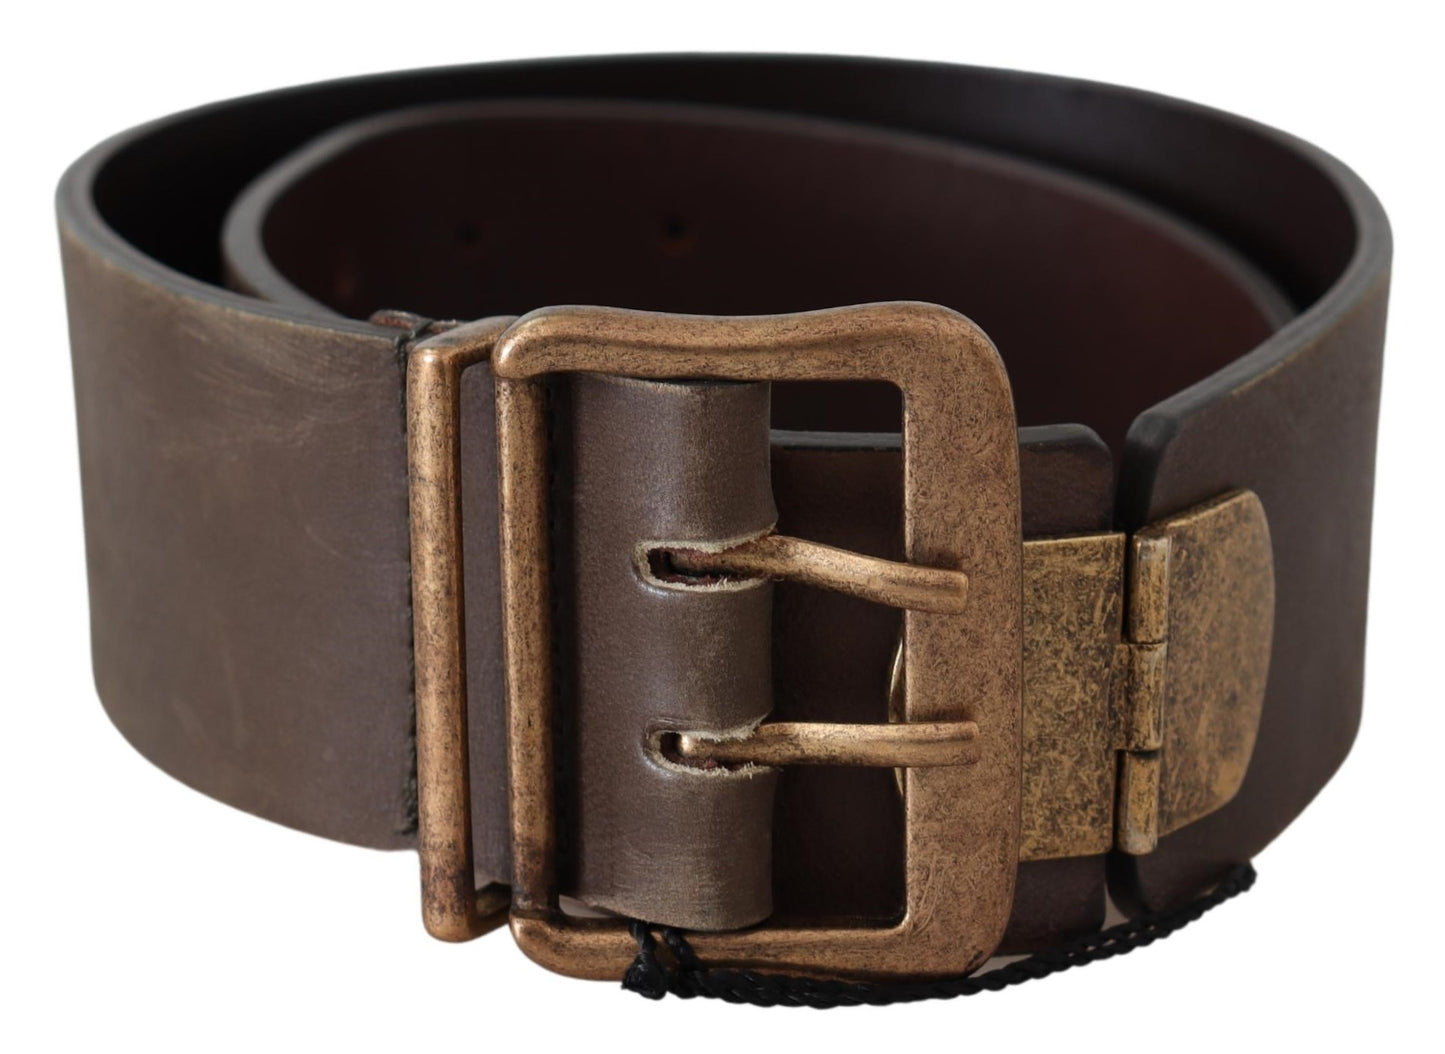 Brown Leather Wide Bronze Buckle Waist Belt